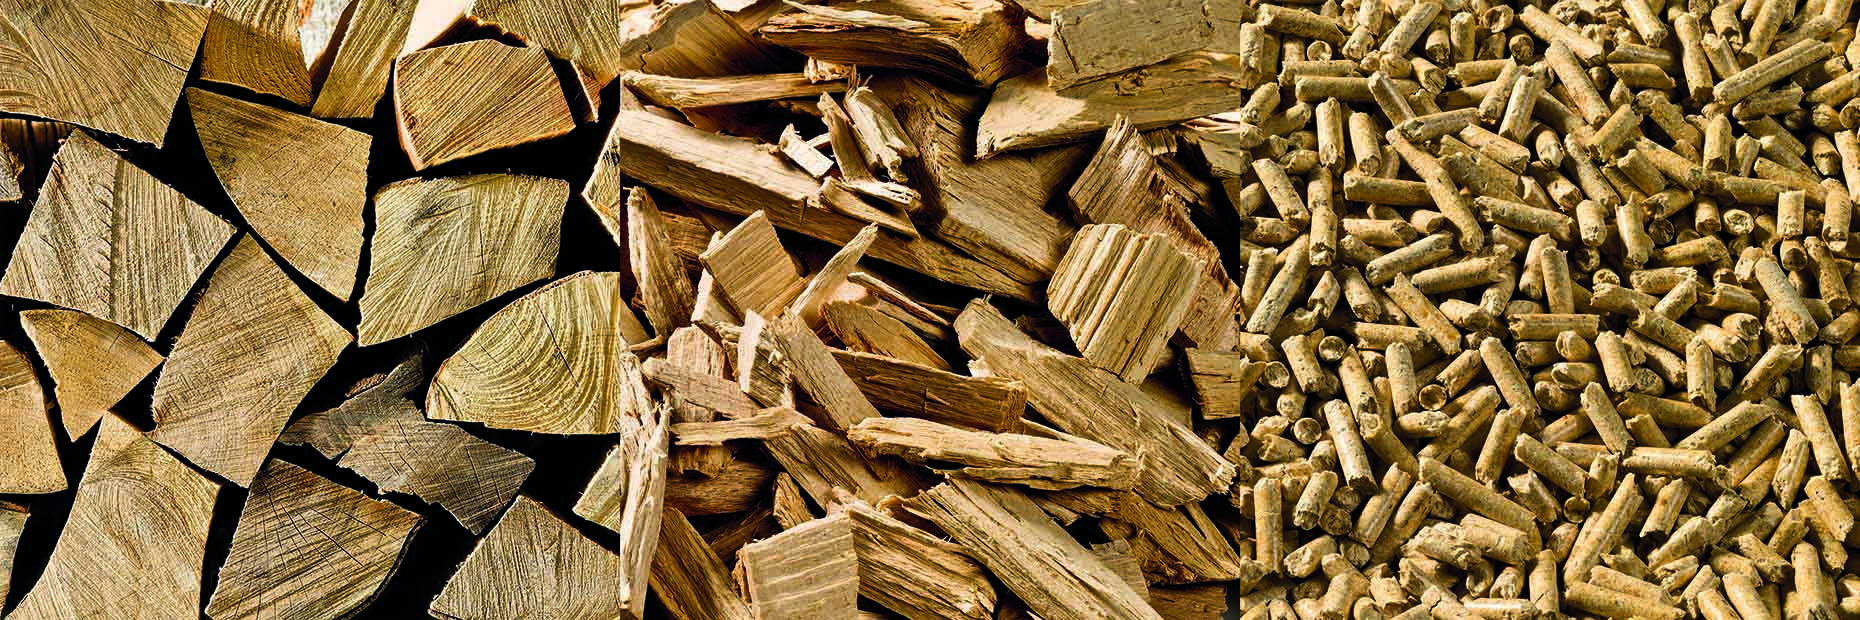 Biomasse-Heizung: Pellets, Scheitholz, Hackgut